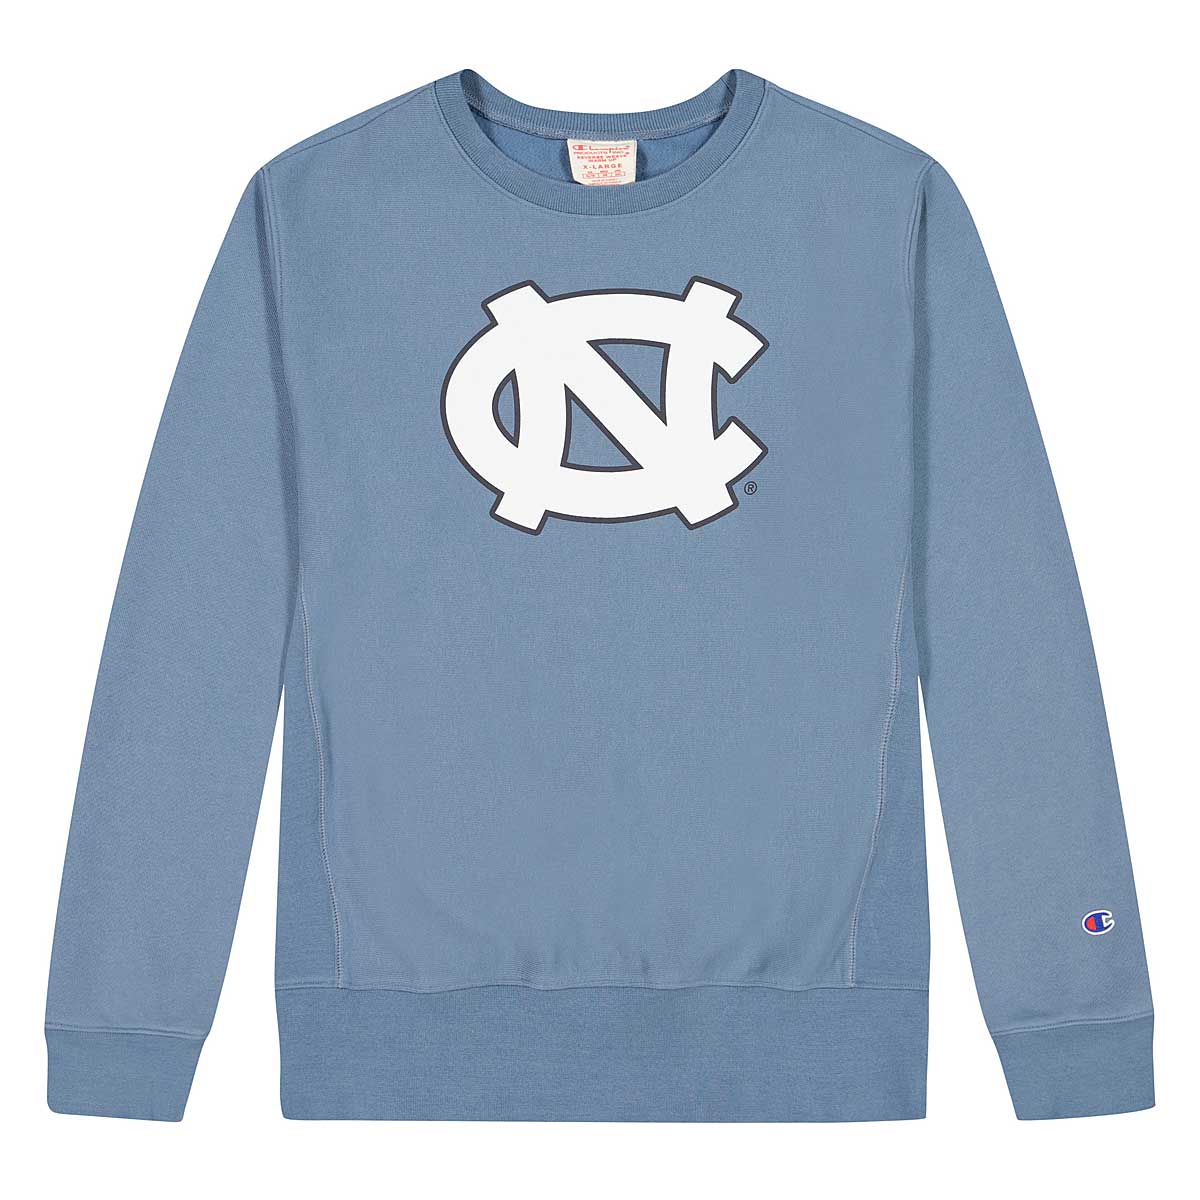 Champion Reverse Weave Ncaa North Carolina Authentic College Crewneck, Coronet Blue